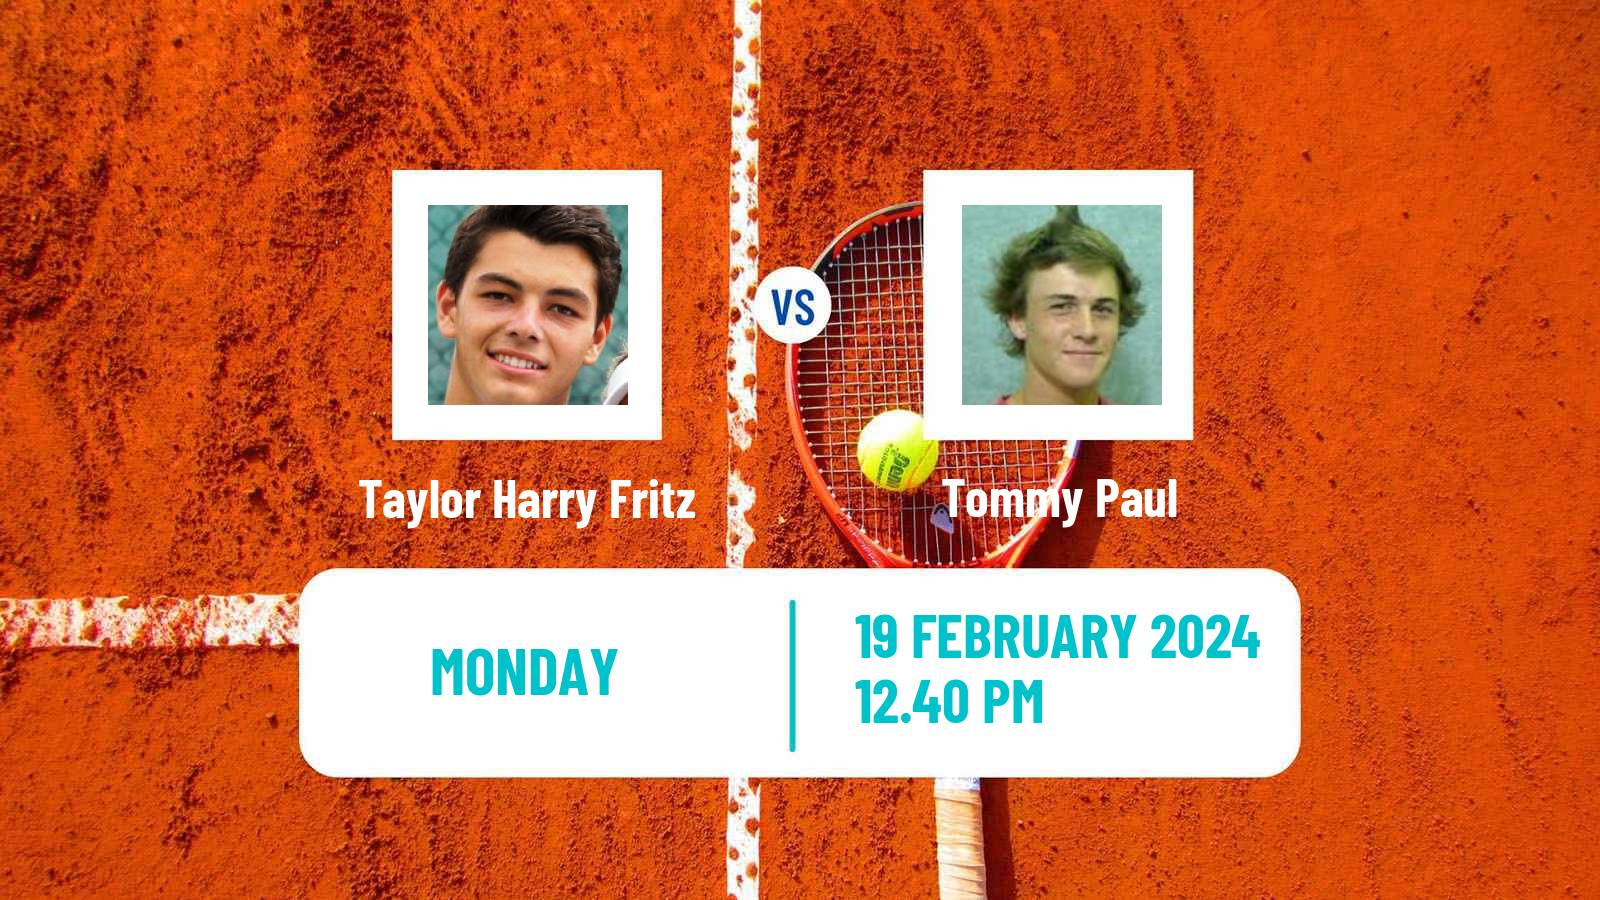 Tennis ATP Delray Beach Taylor Harry Fritz - Tommy Paul